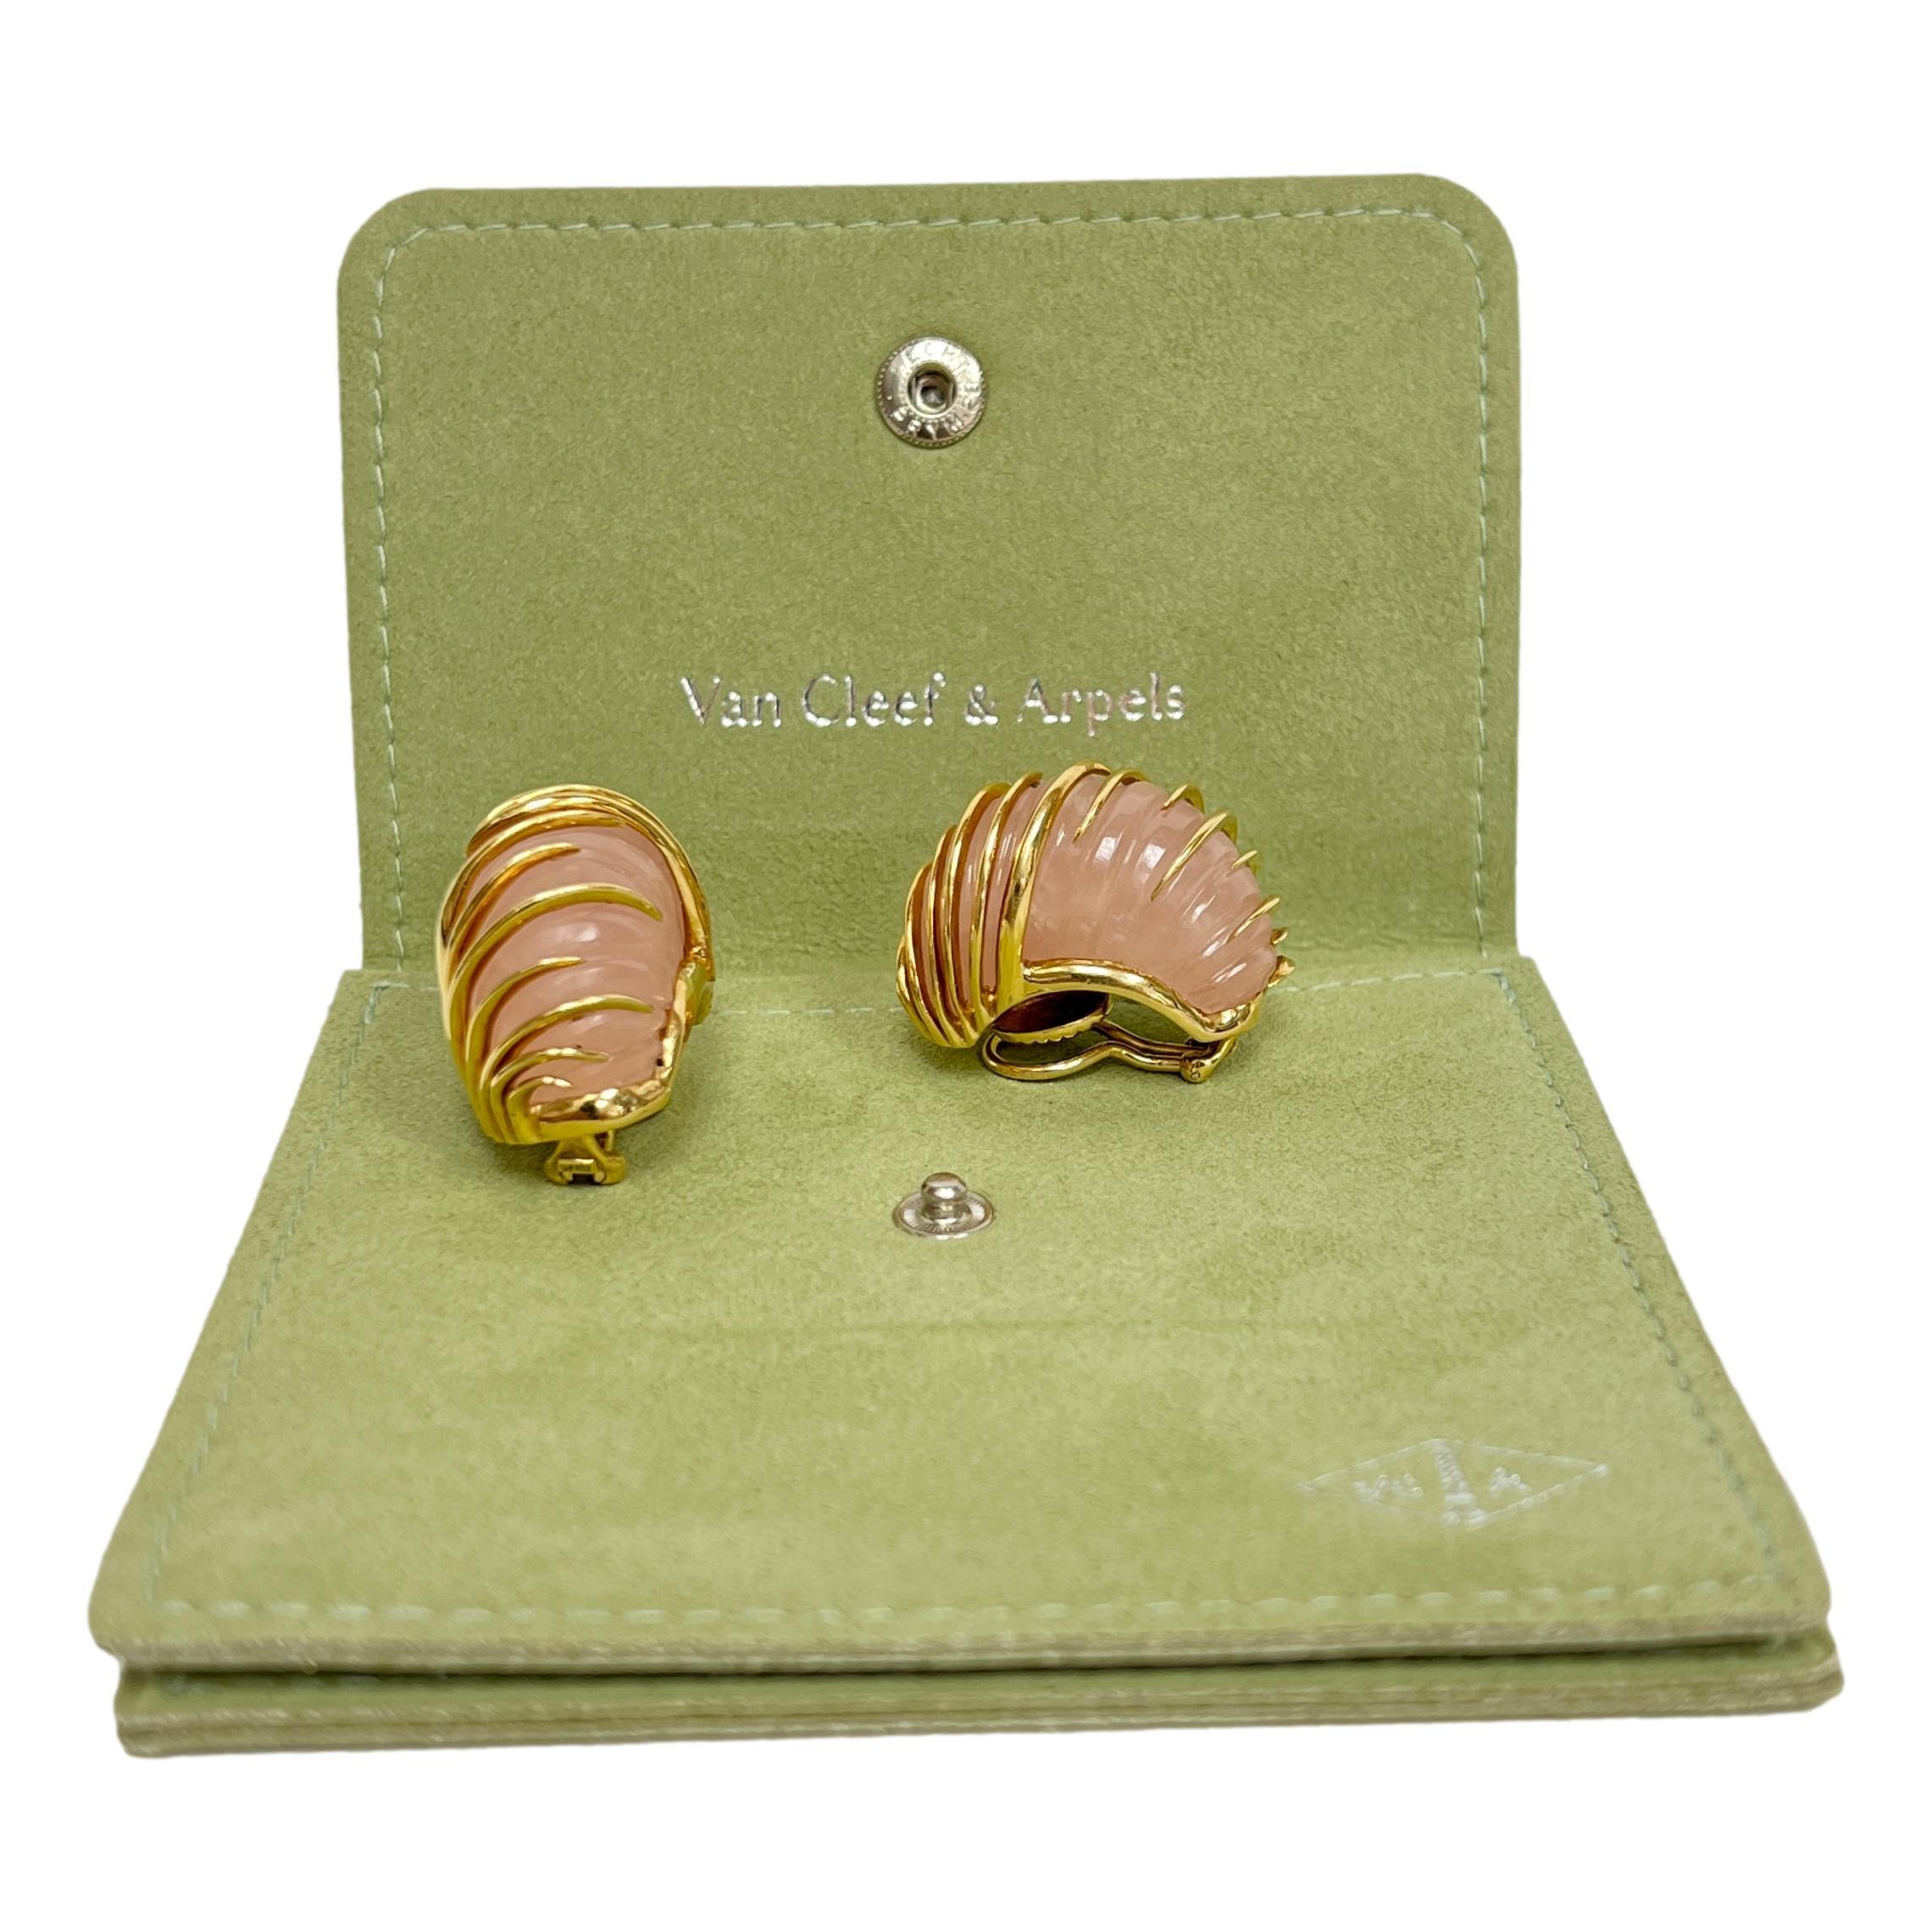 Van Cleef & Arpels Carved Rose Quartz Earrings in 18 Karat Yellow Gold For Sale 3